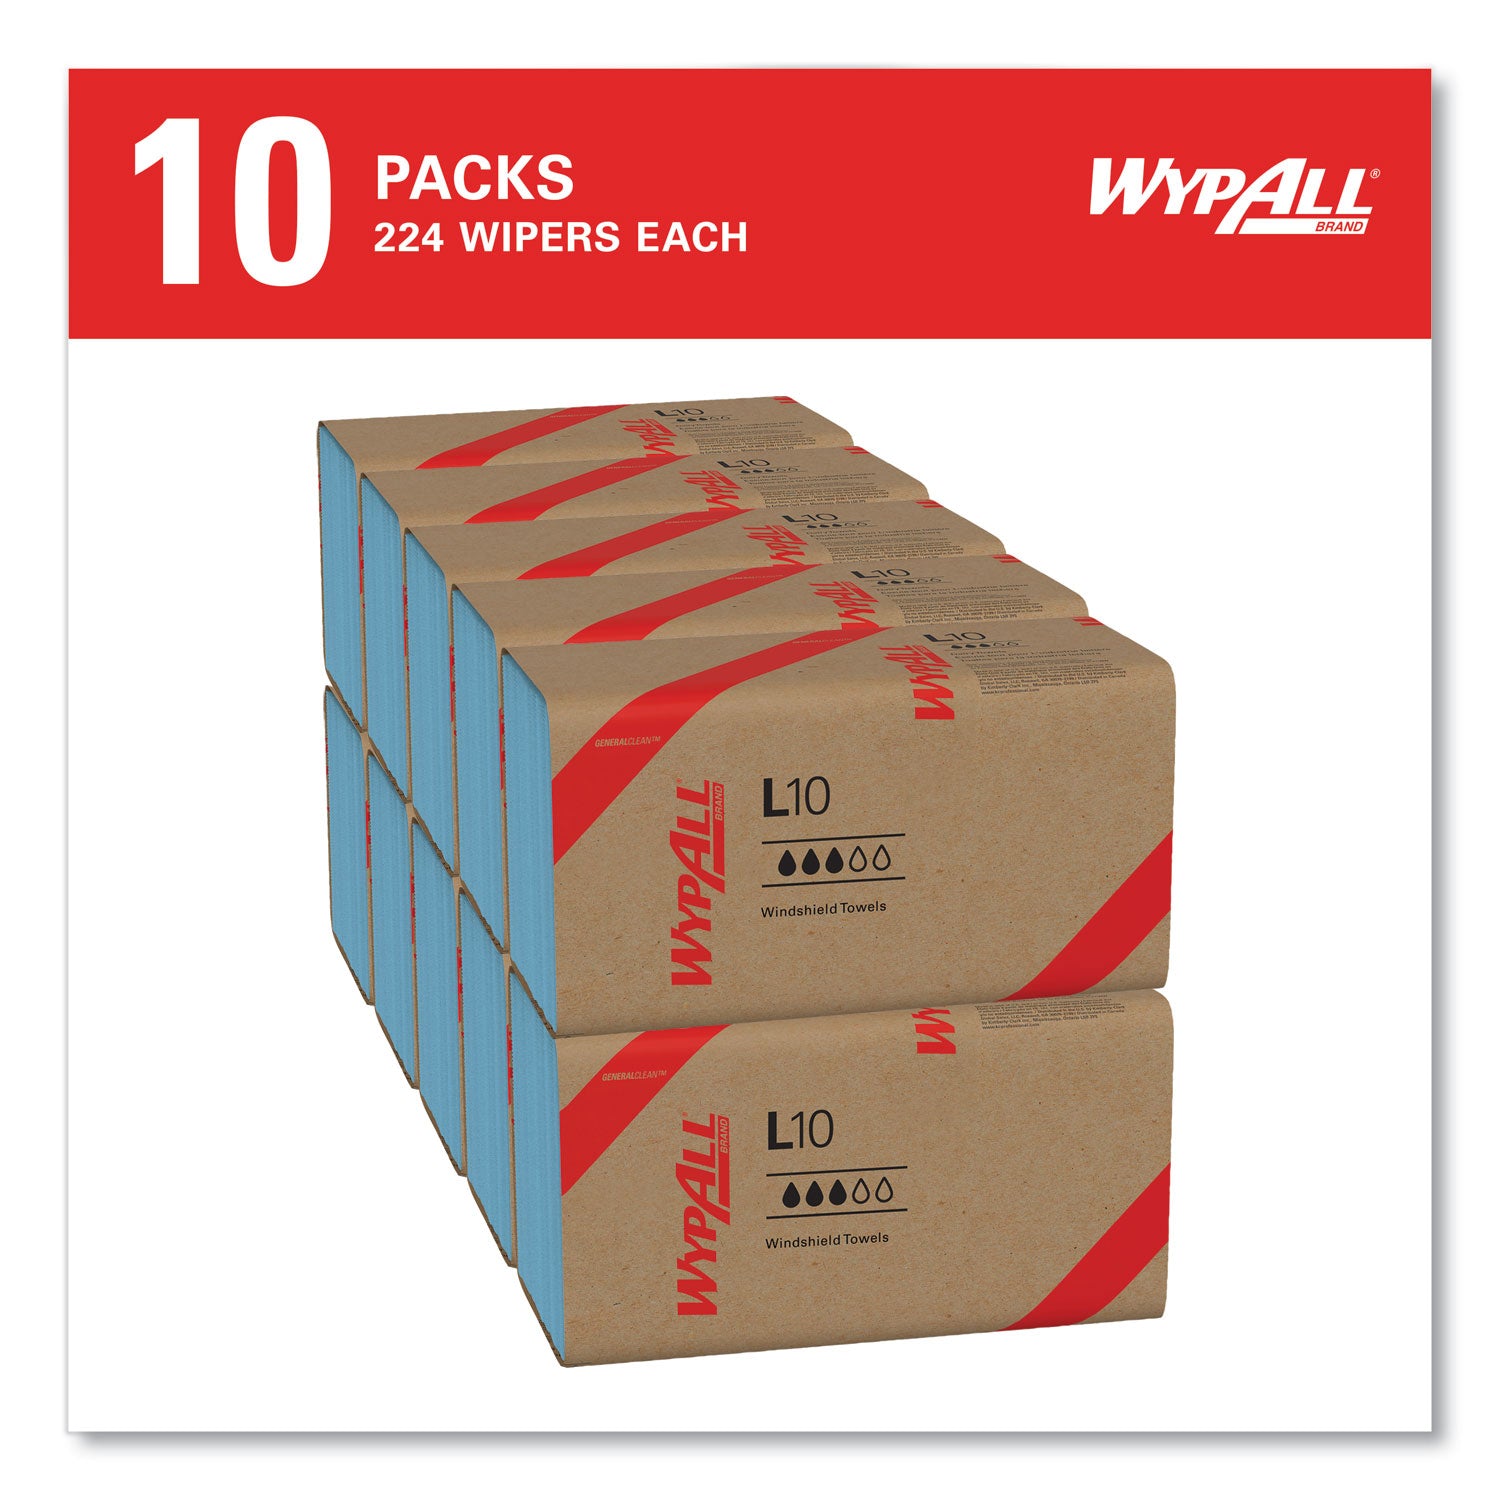 L10 Windshield Towels, 1-Ply, 9.1 x 10.25, Light Blue, 224/Pack, 10 Packs/Carton - 